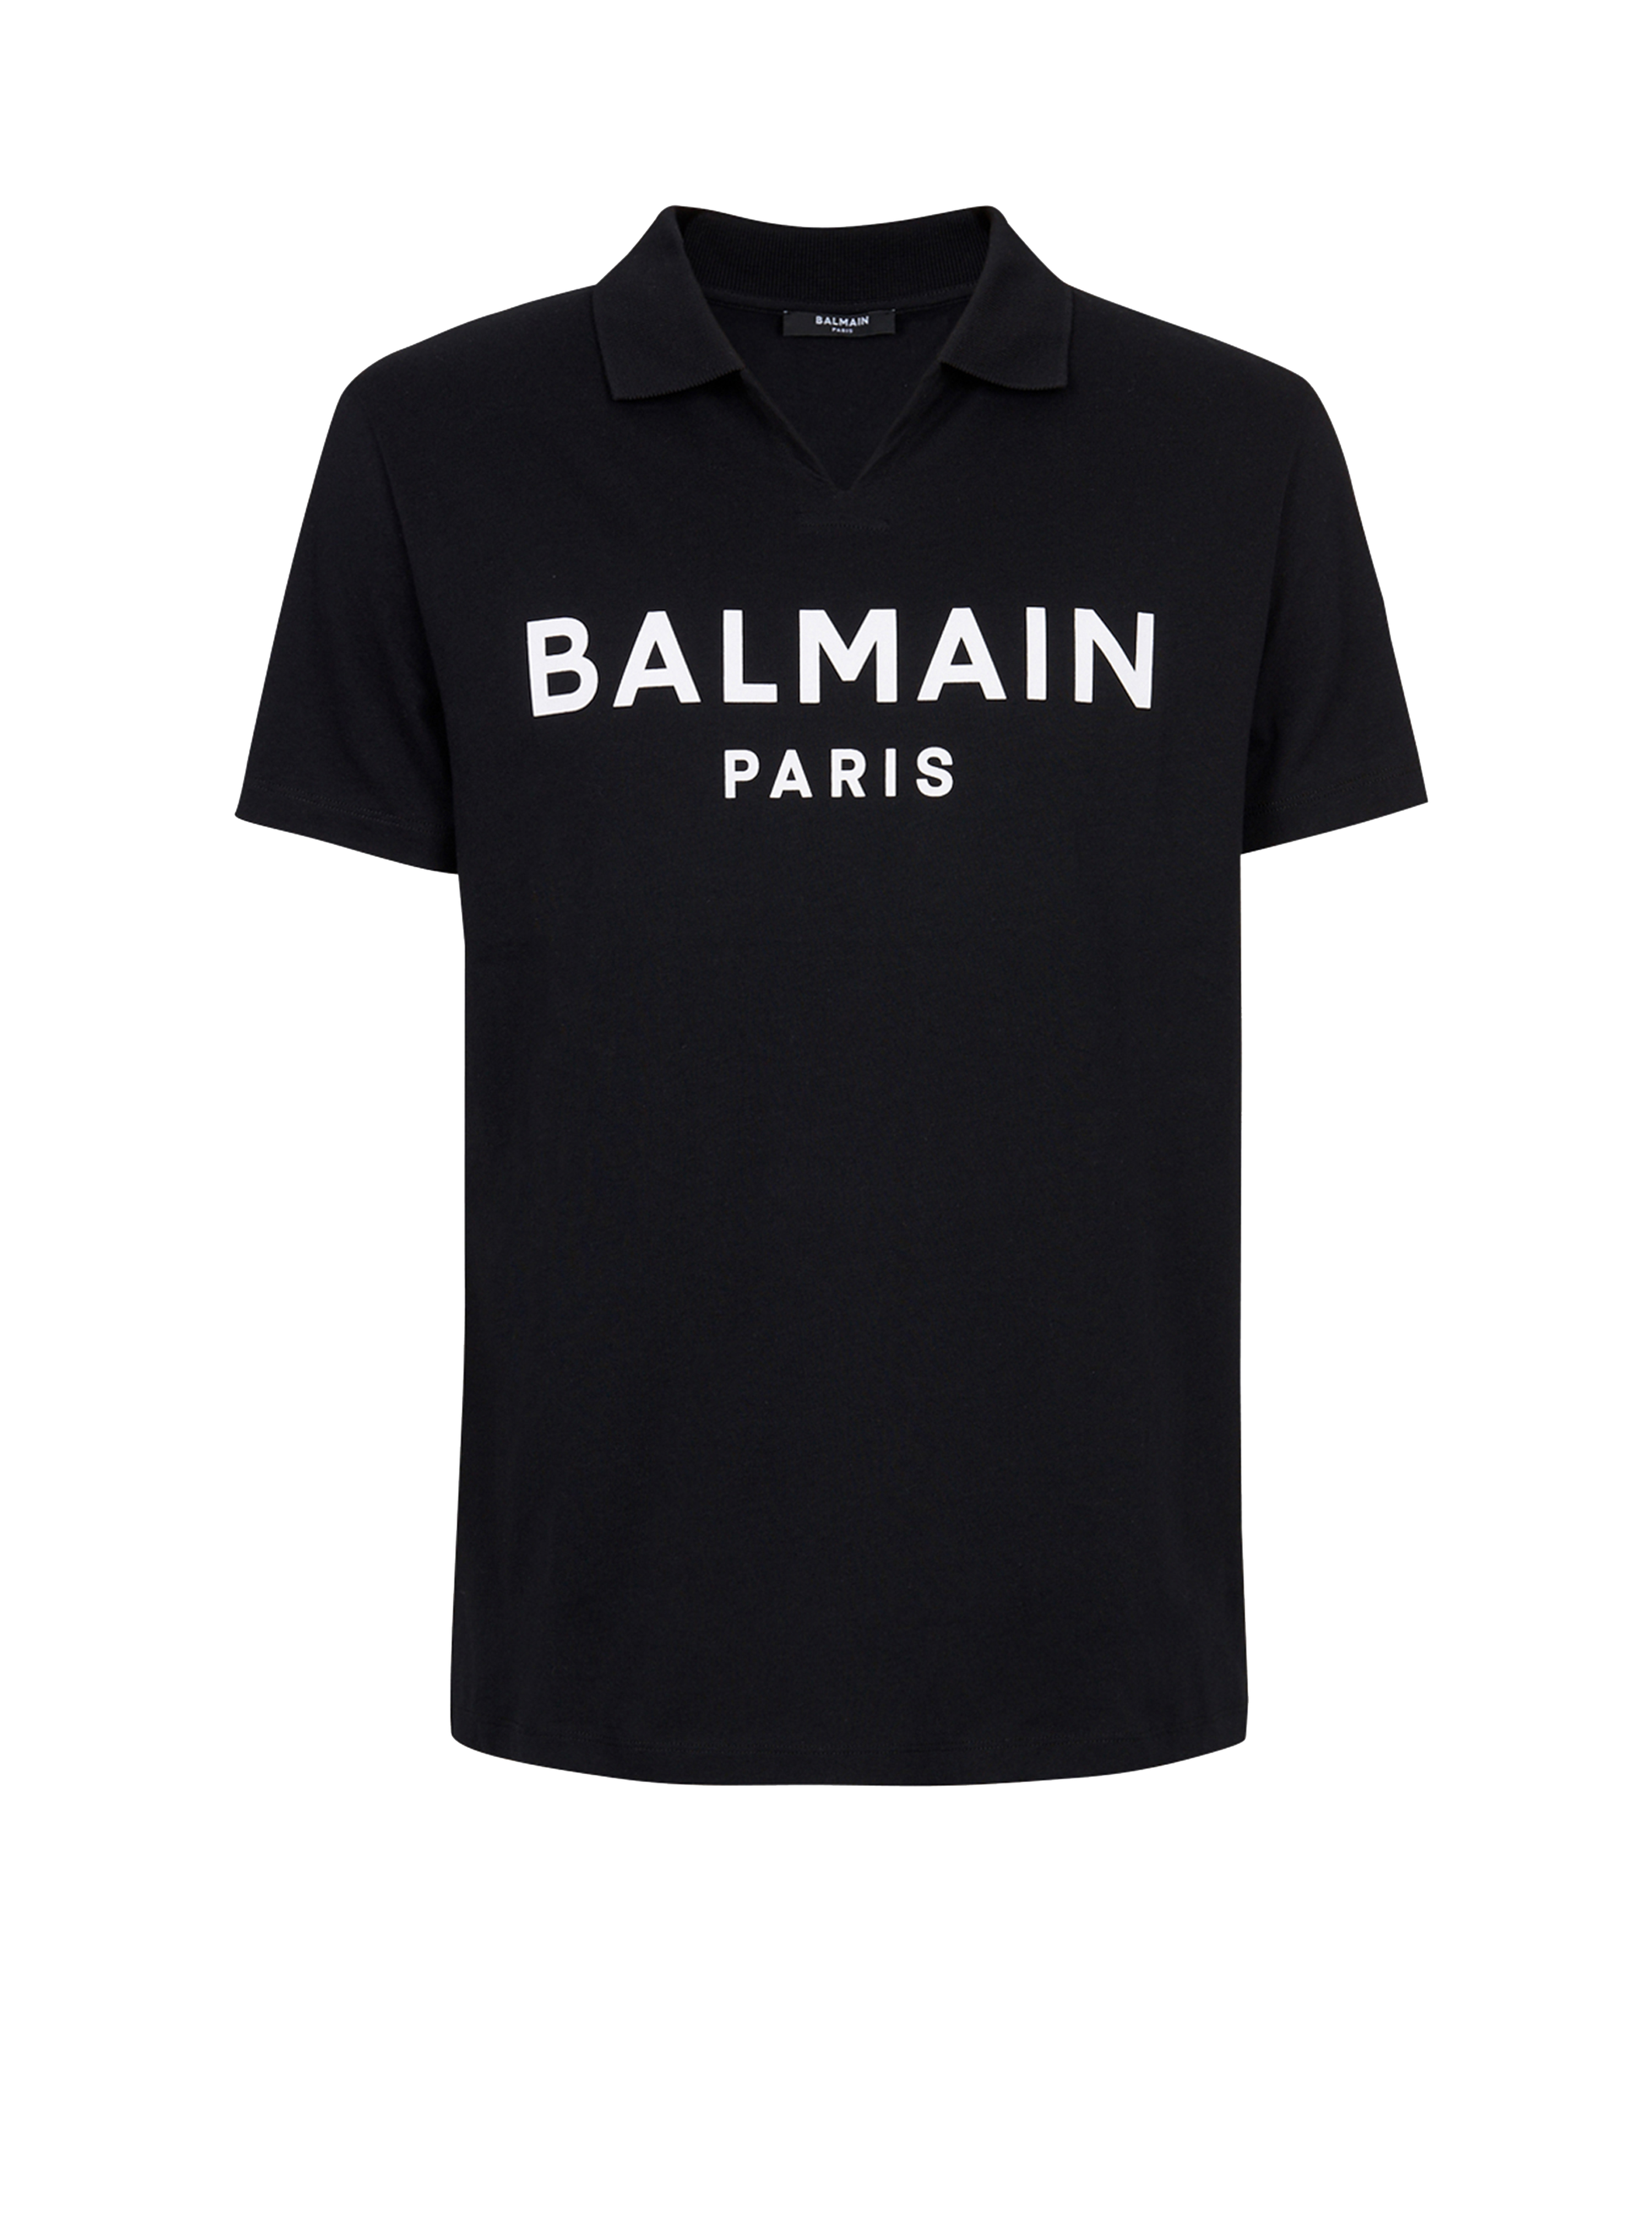 Cotton polo with black Balmain logo print, black